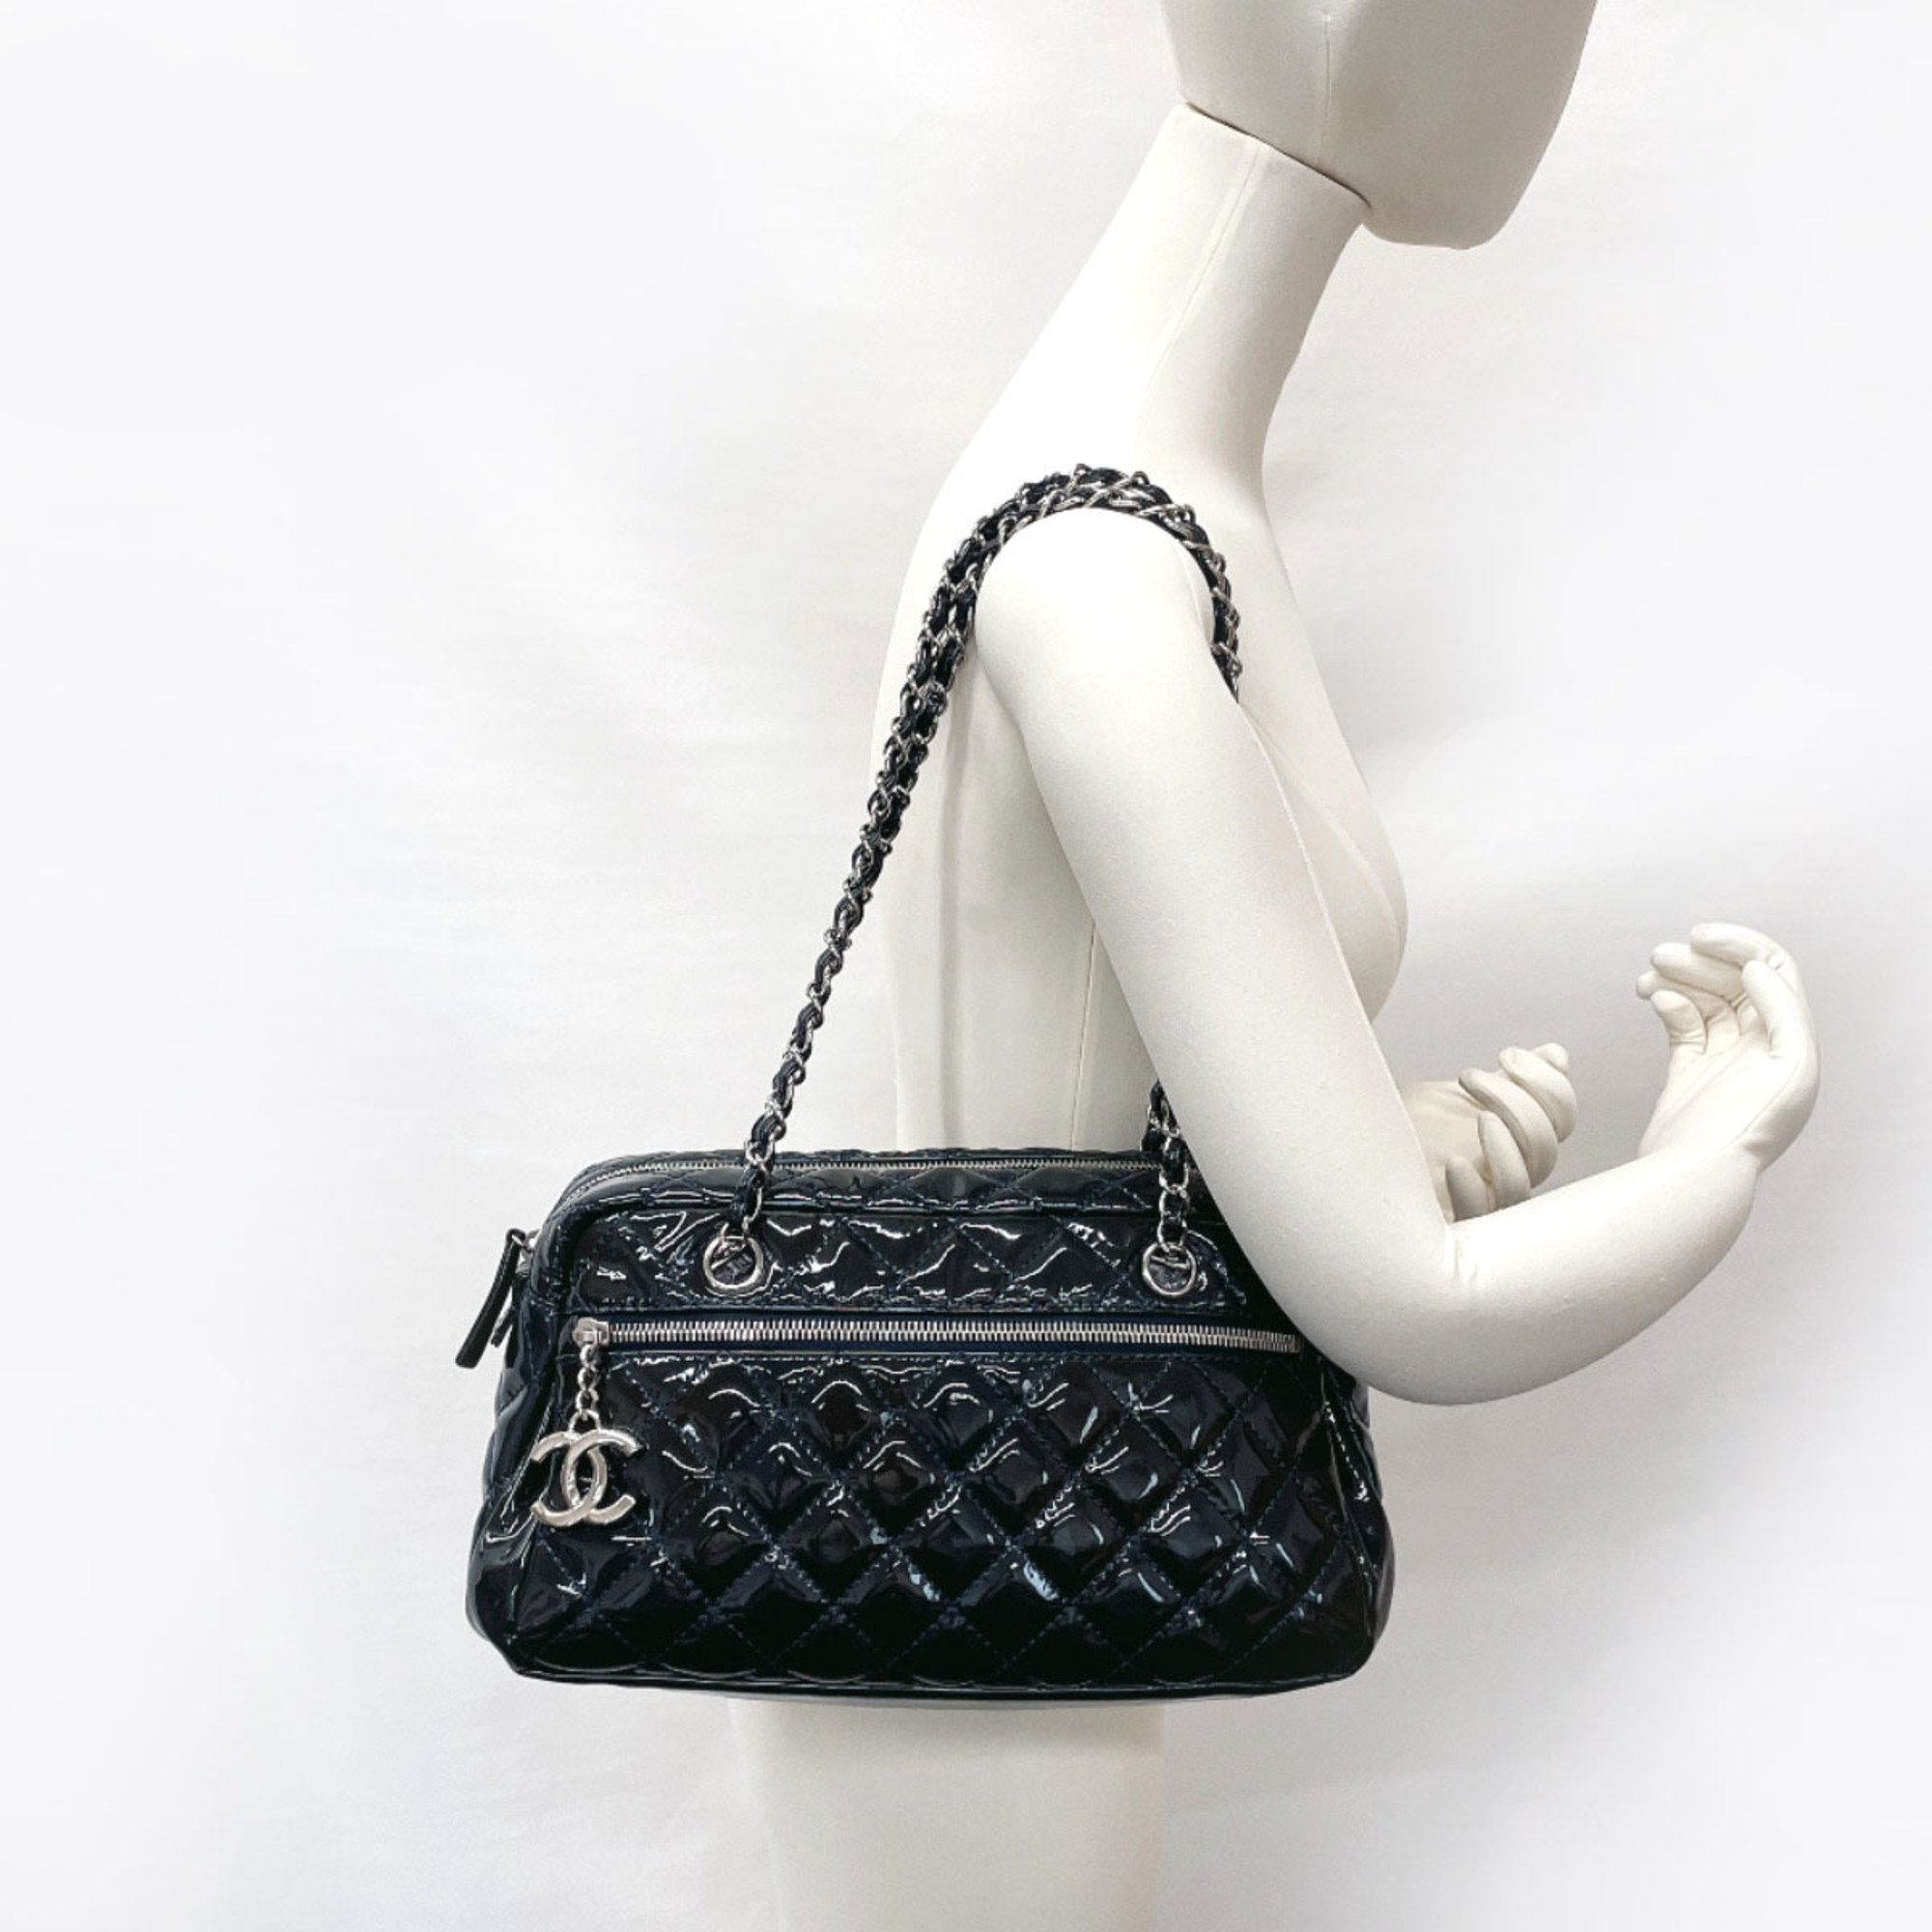 CHANEL Chanel Matelasse Chain Shoulder Handbag Patent Leather Navy Women's